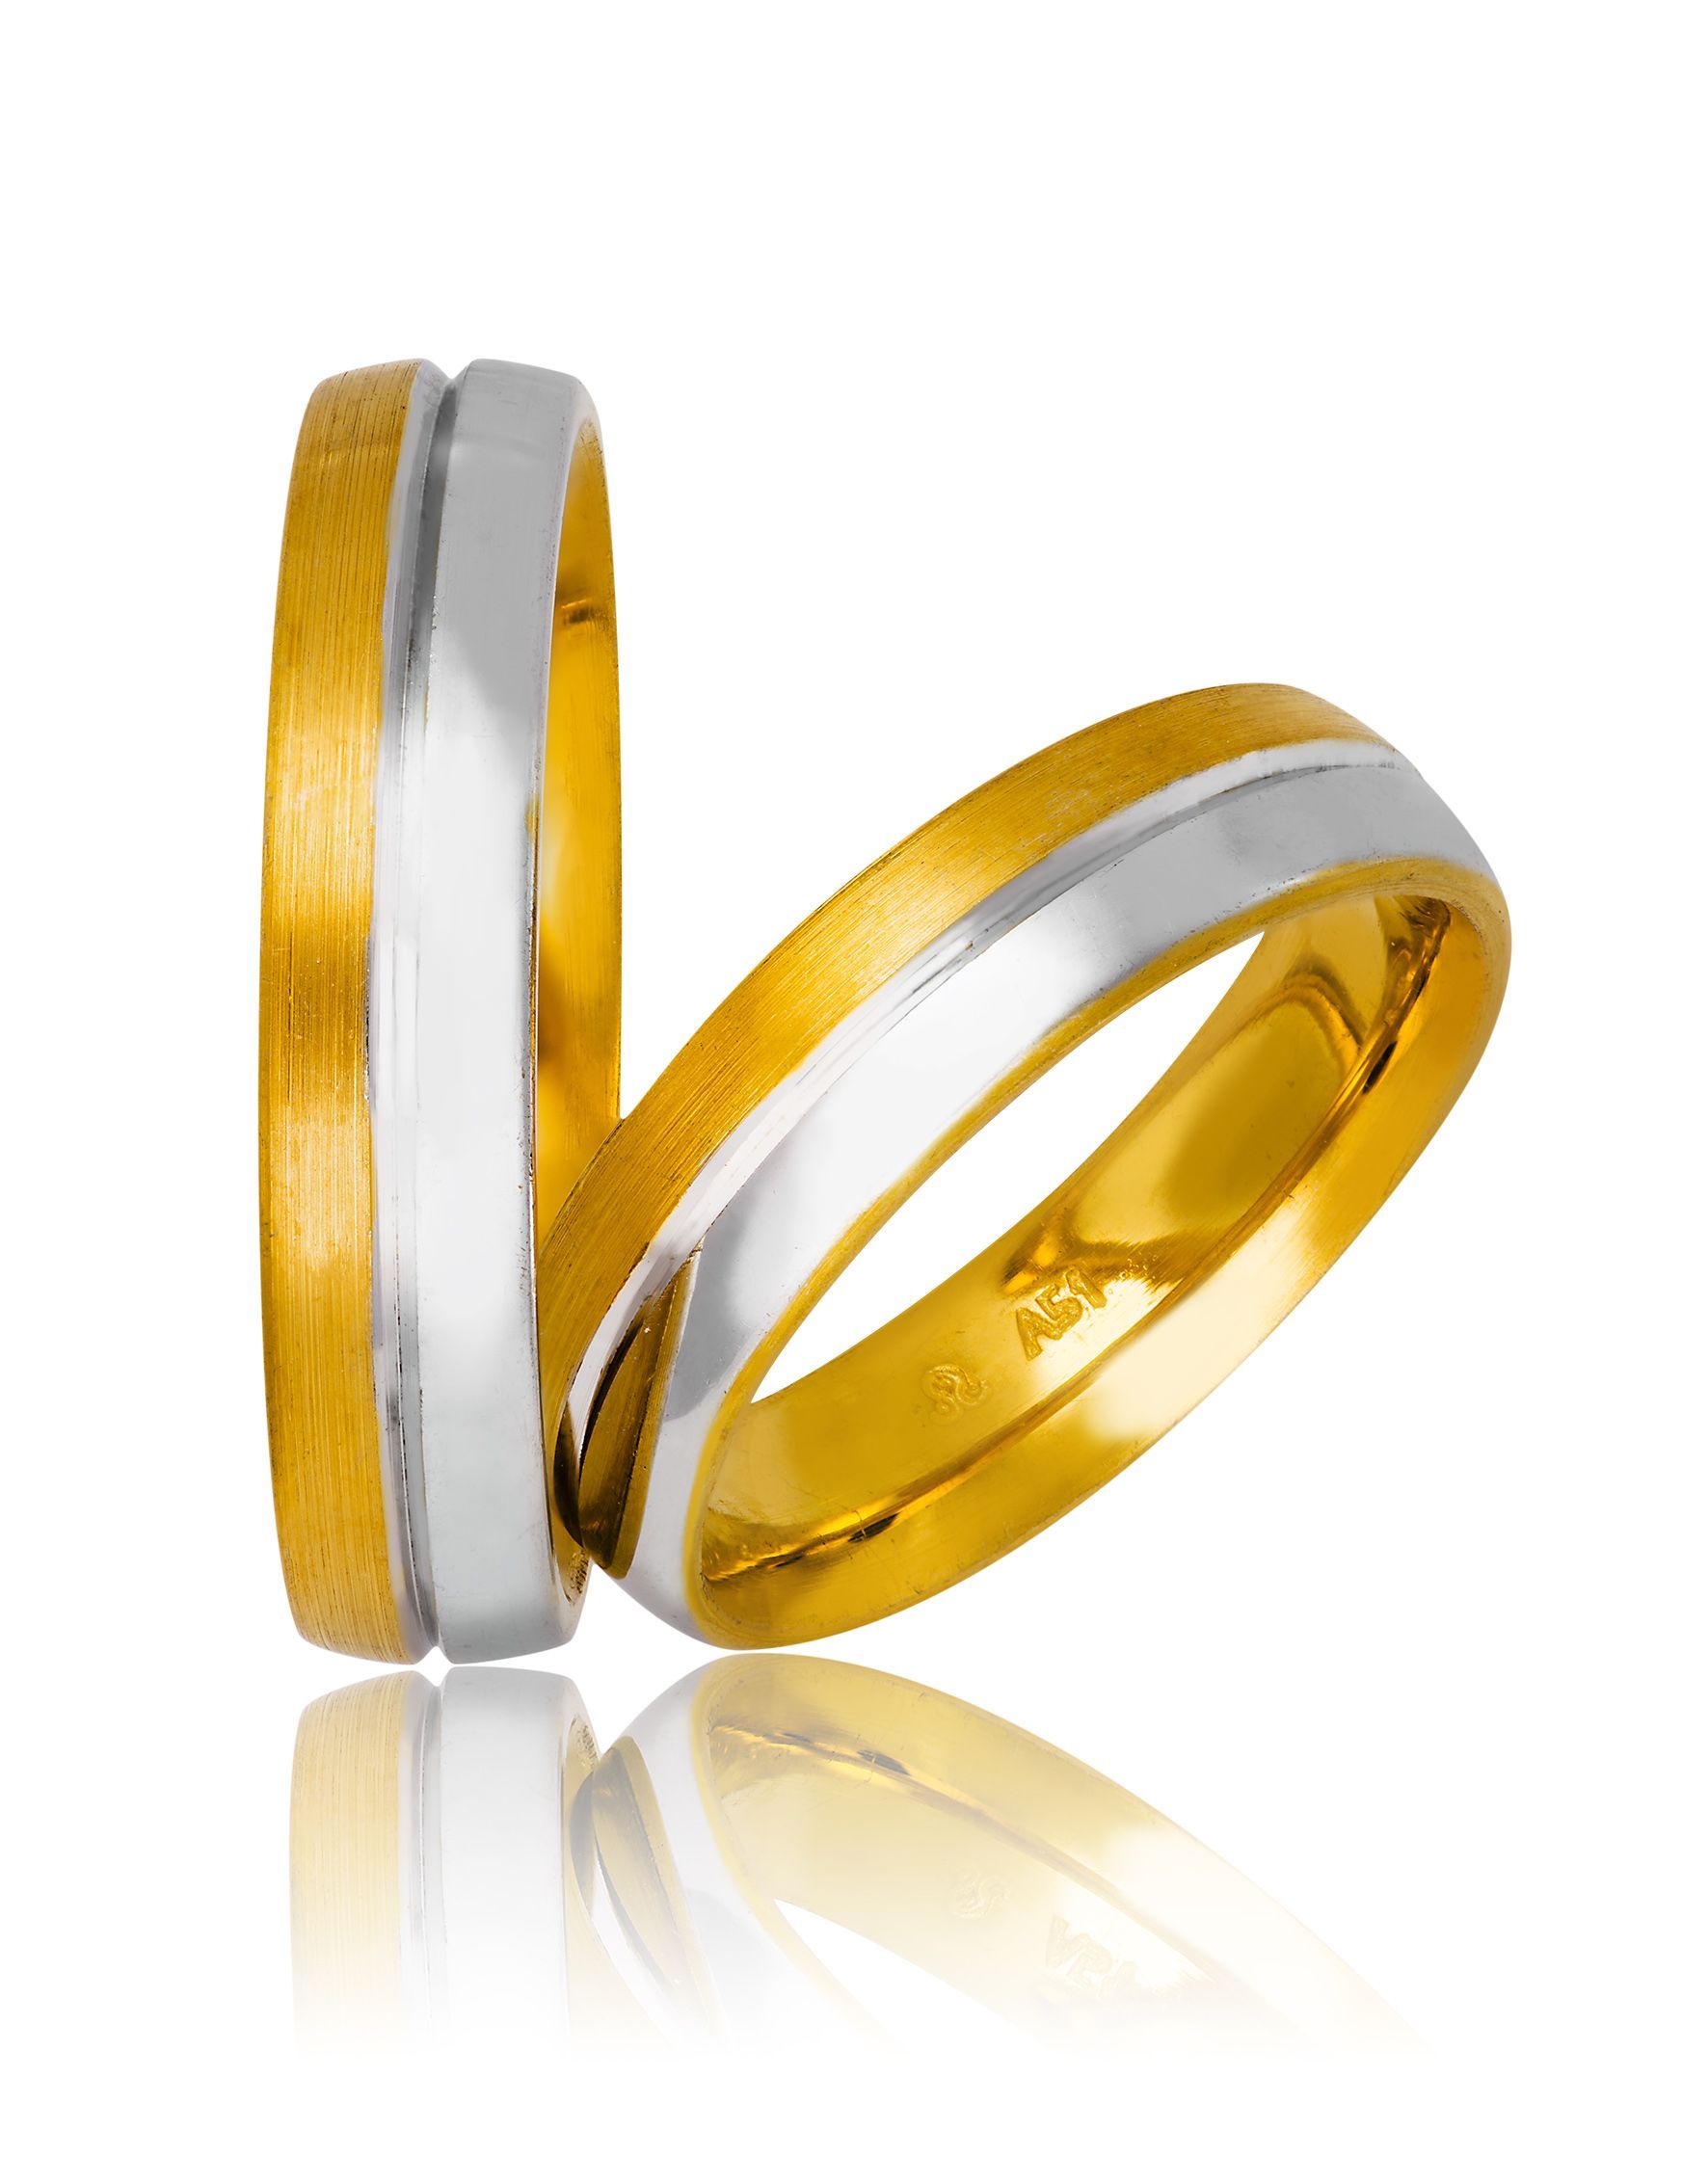 White gold & gold wedding rings 5mm (code 734)